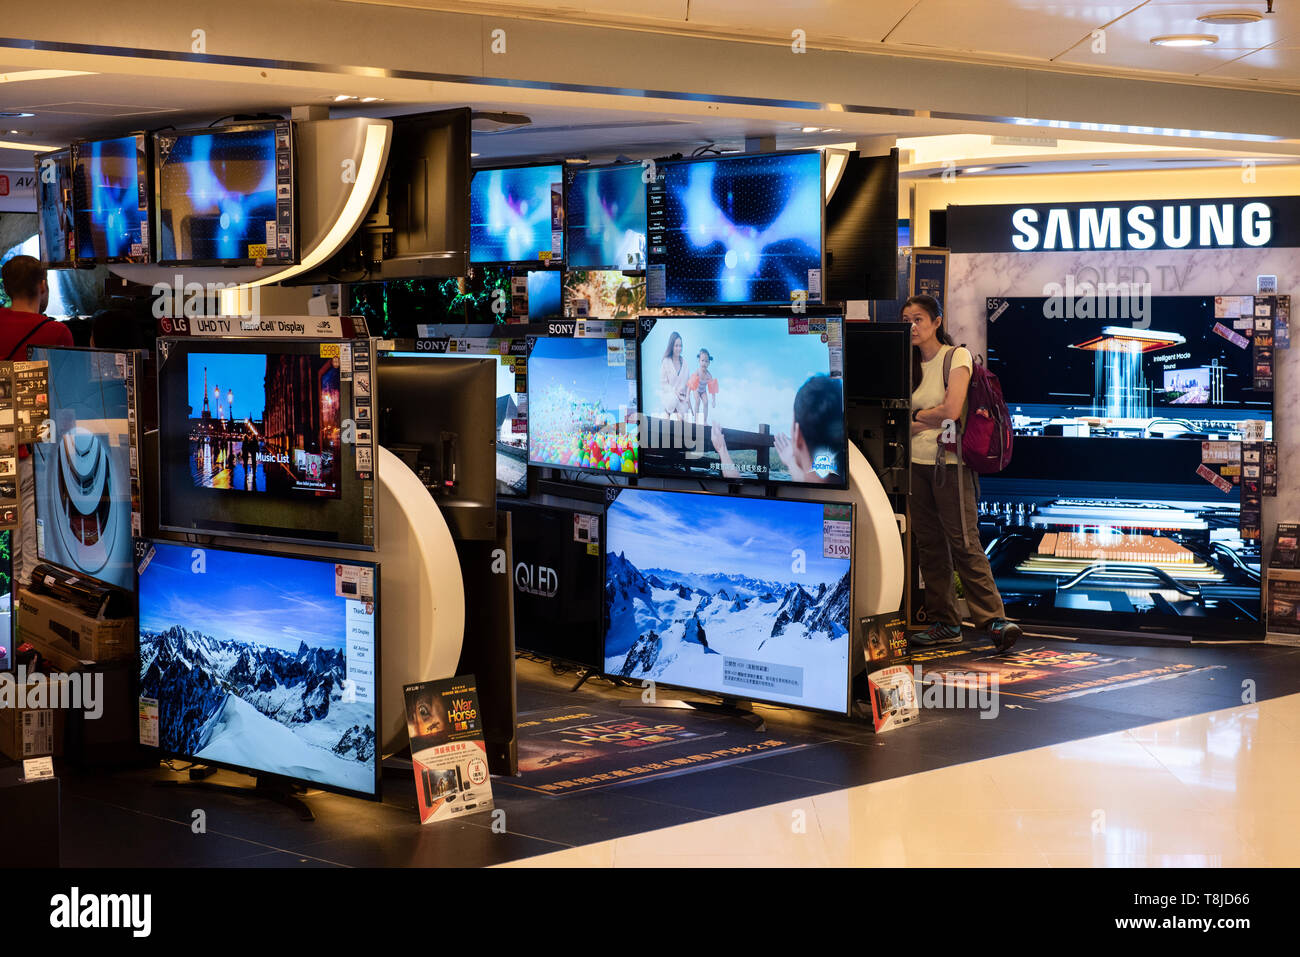 South Korean QLED TV Samsung seen displaying products in Hong Kong shopping mall. Stock Photo